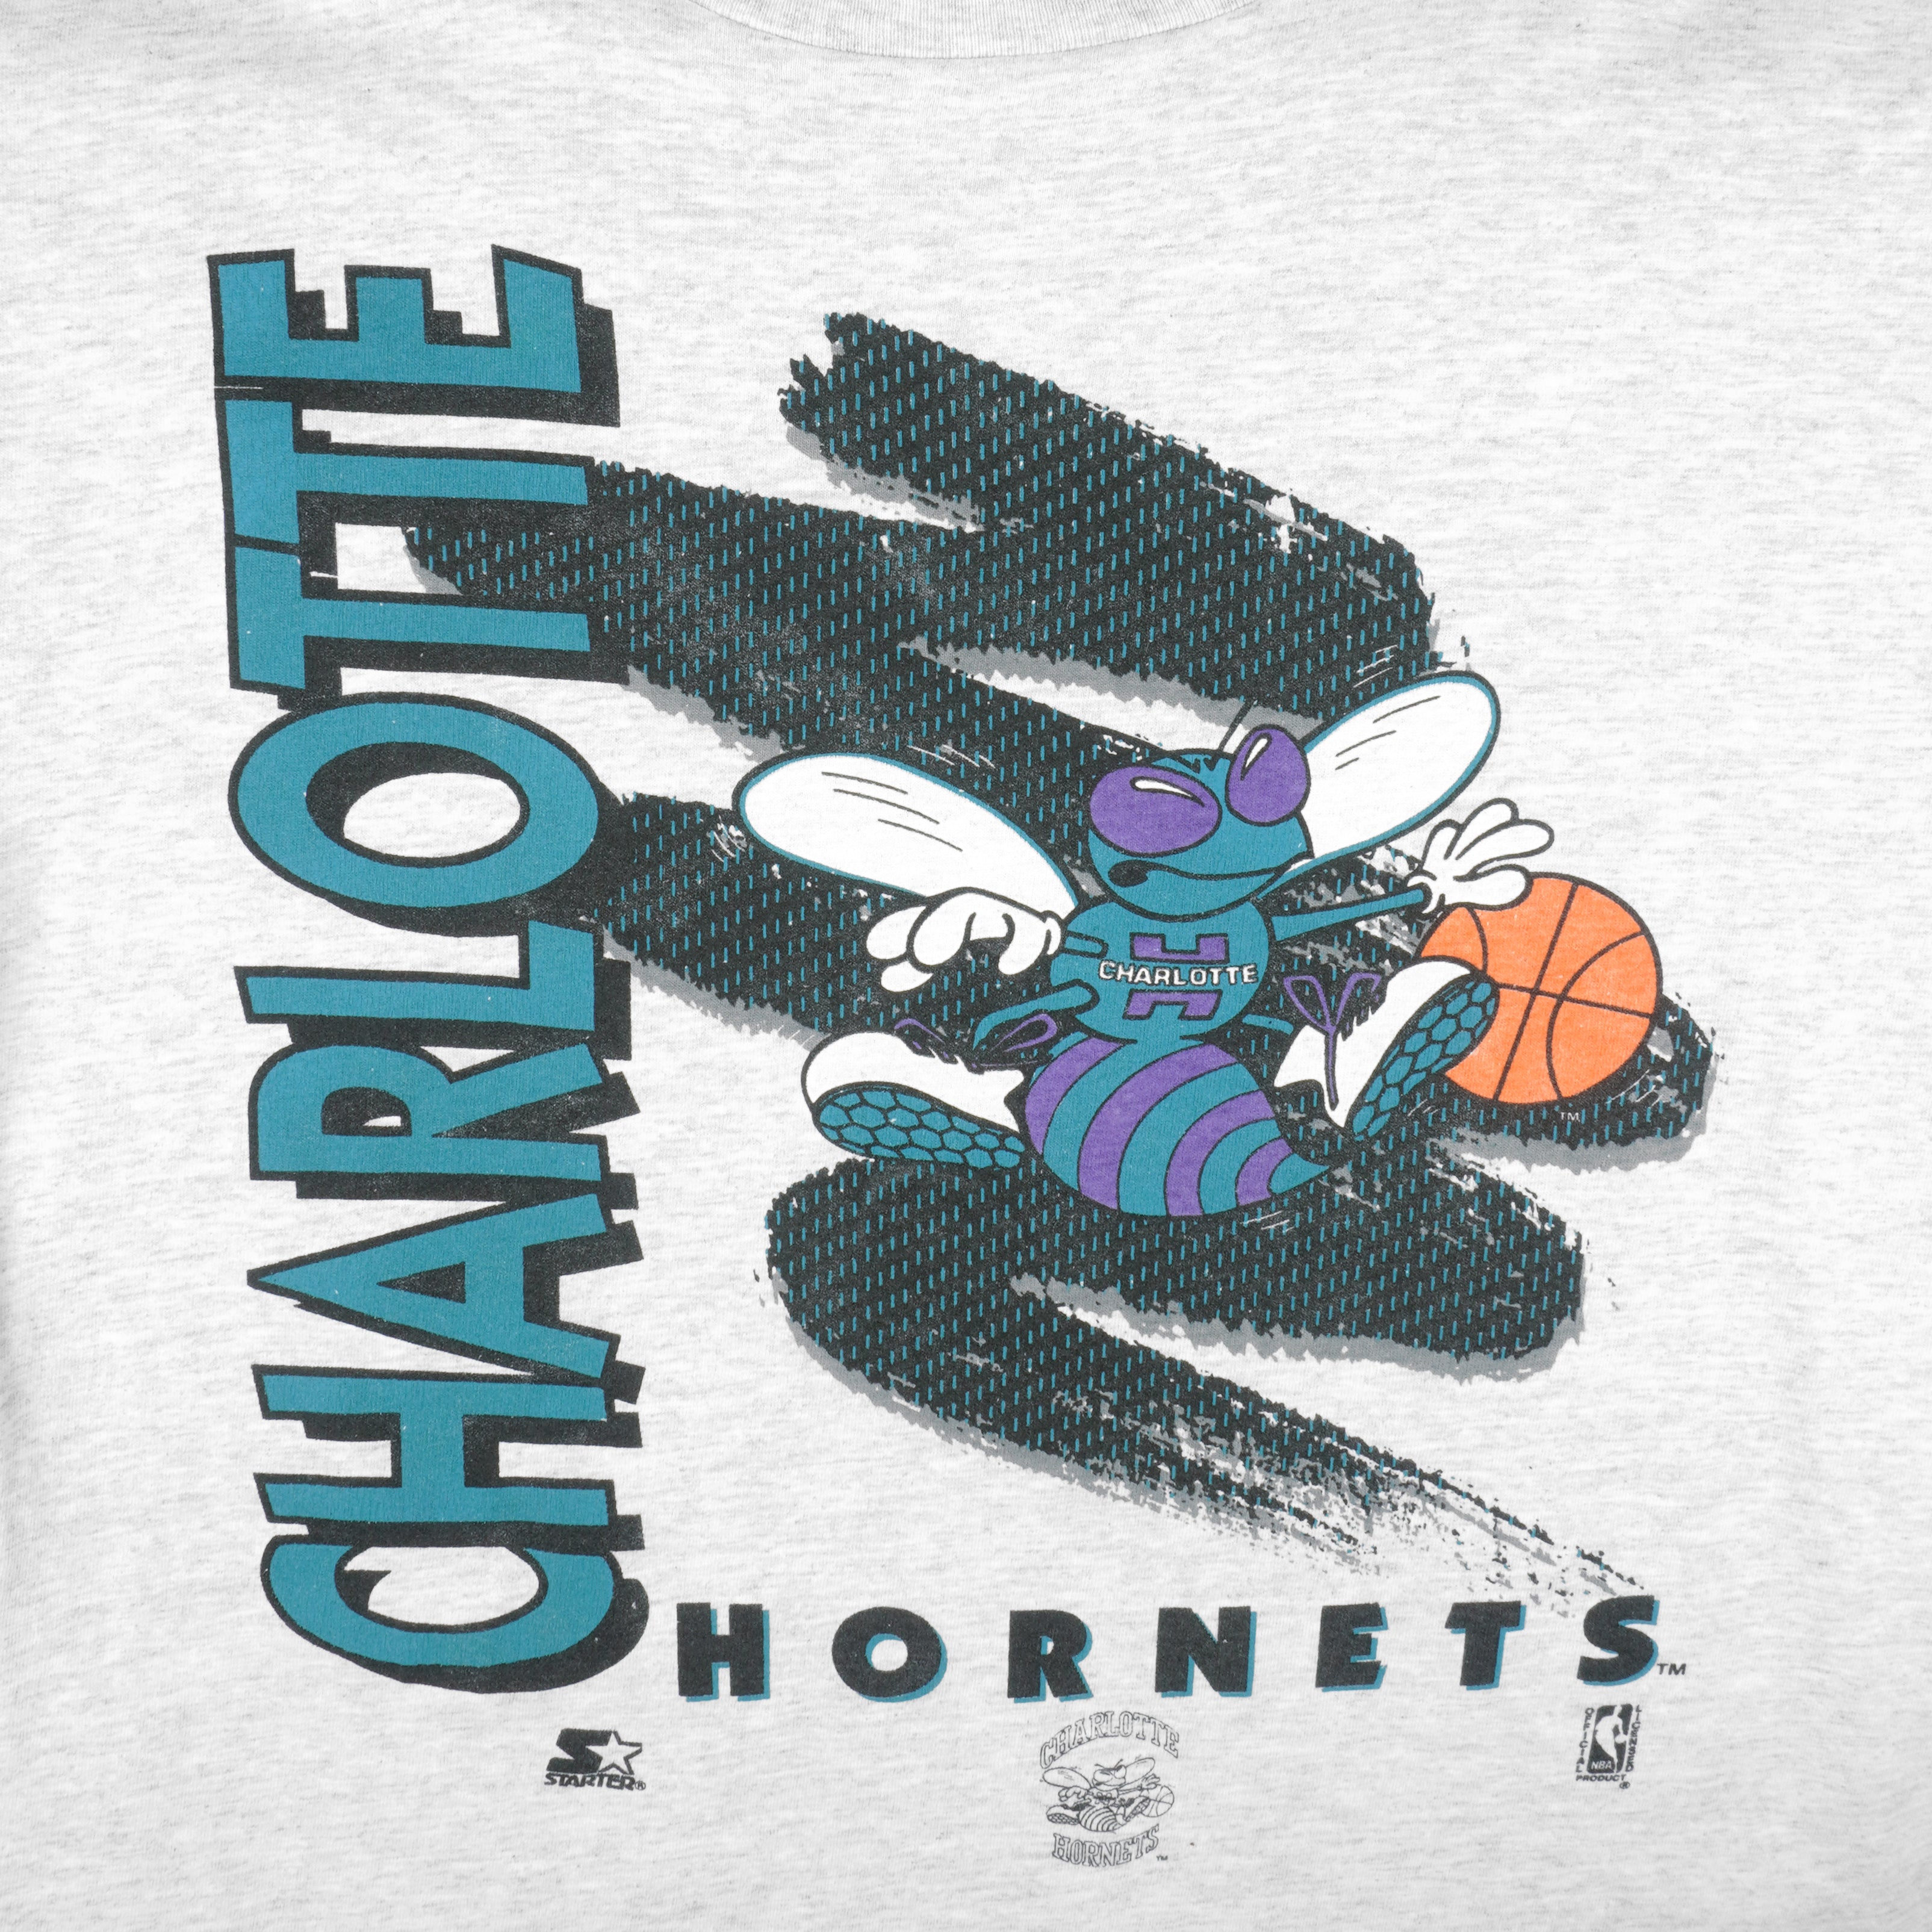 STARTER, Shirts, Vintage 9s Starter Nba Charlotte Hornets Baseball Jersey  Large